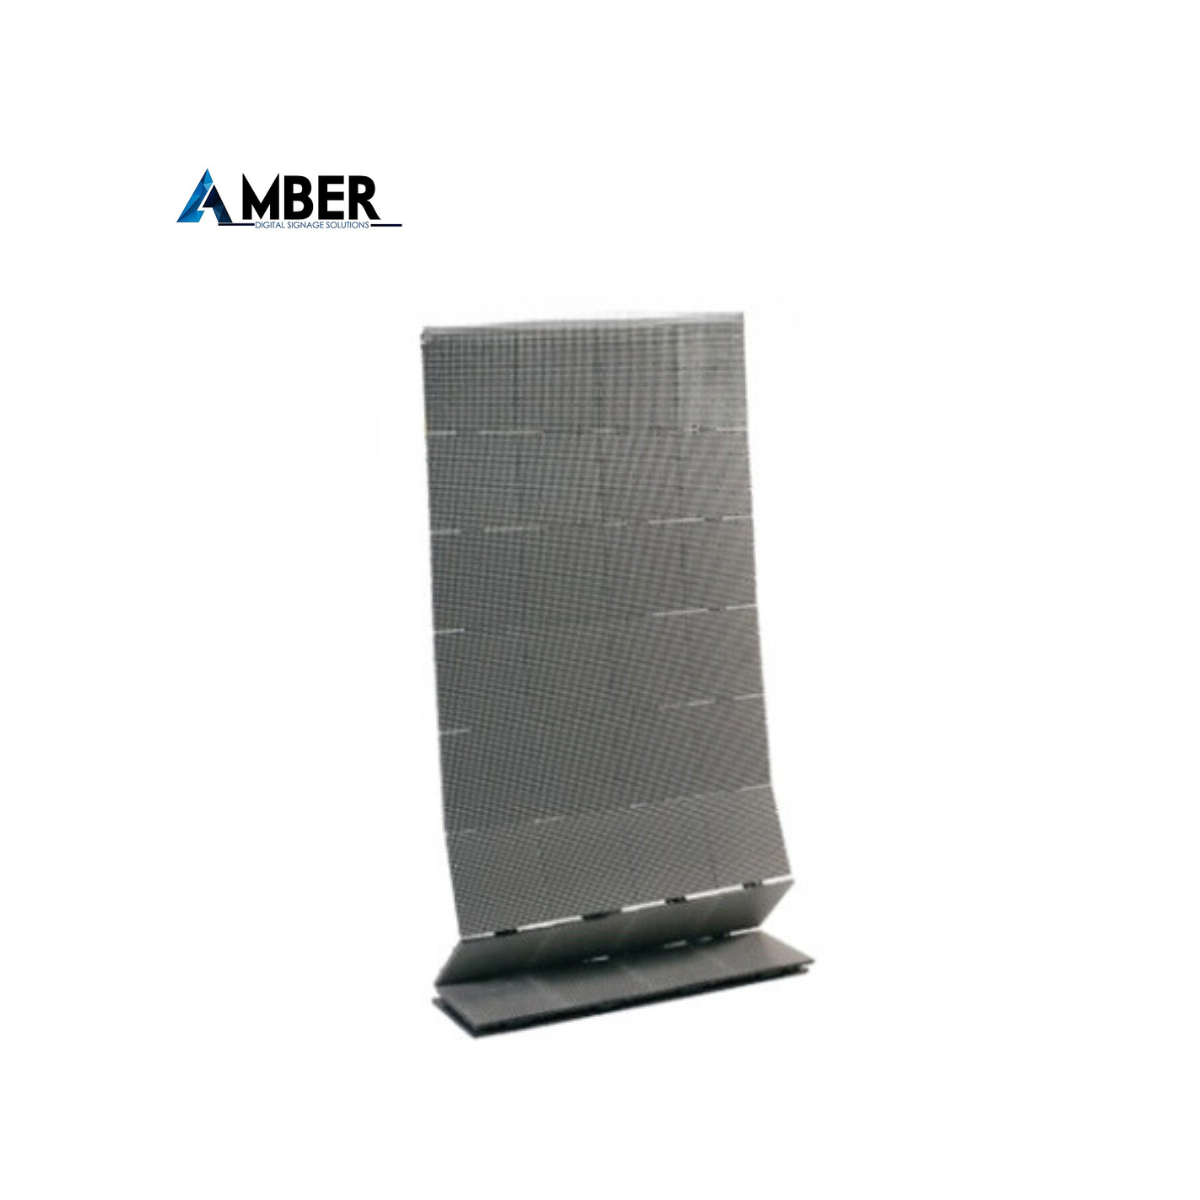 Amber BV-F Flexible Foldable LED Series